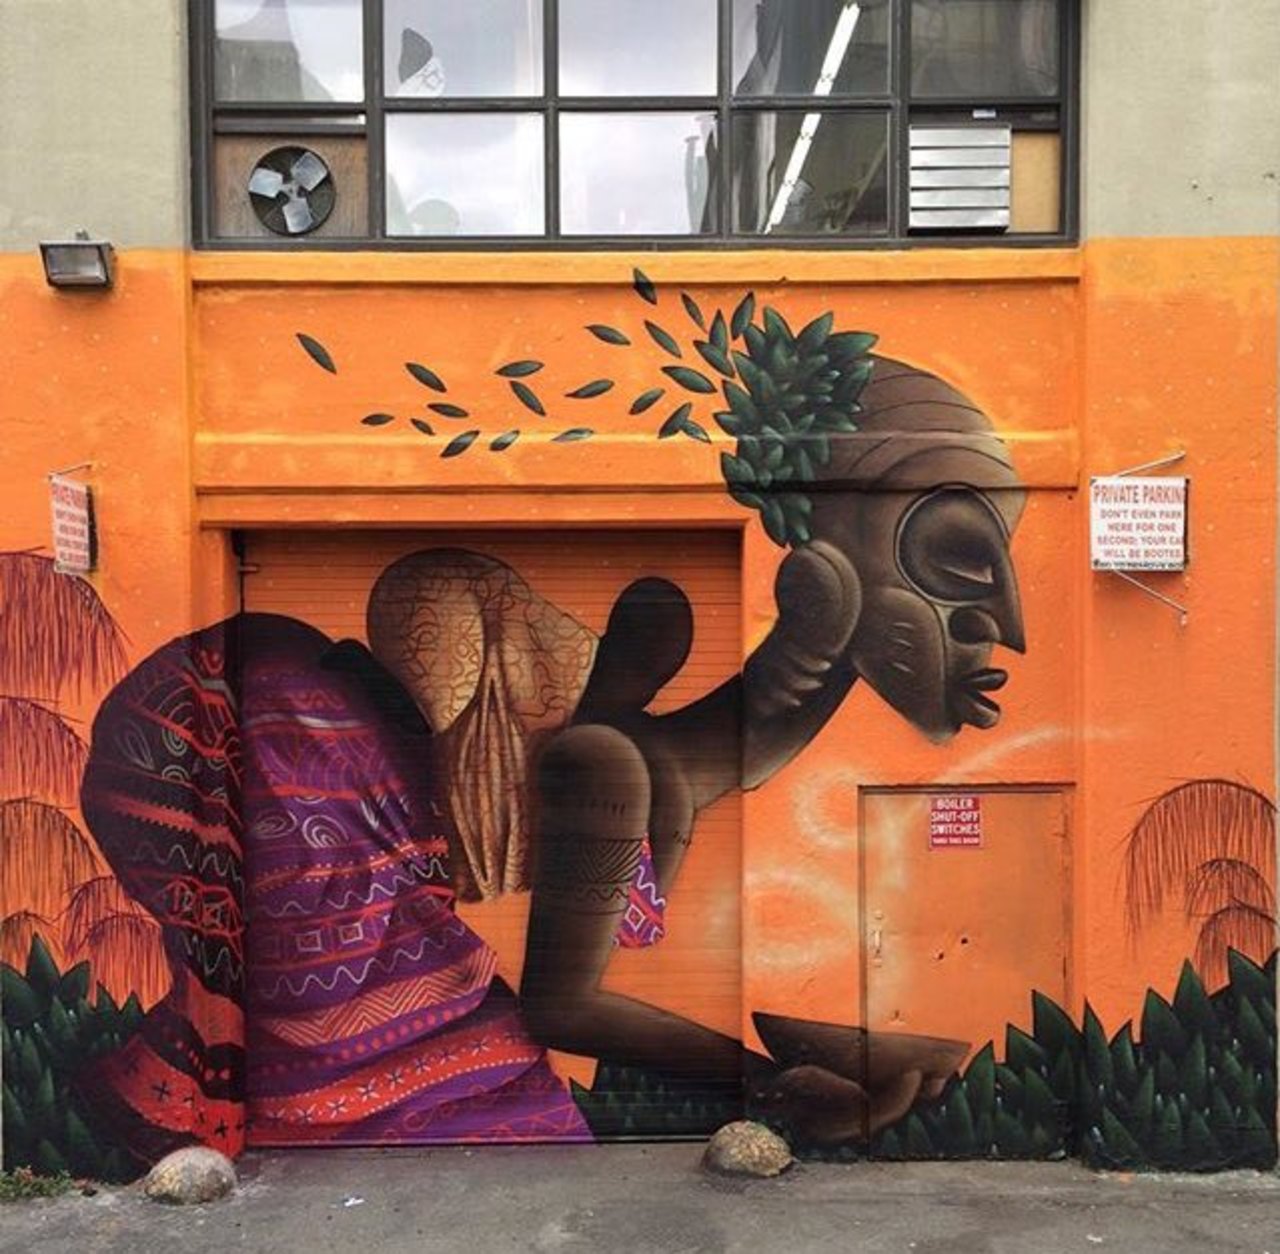 RT @wearpure_com: New Street Art by Alexandre Keto in NYC 

#art #graffiti #mural #streetart https://t.co/LE9PQiwHhT